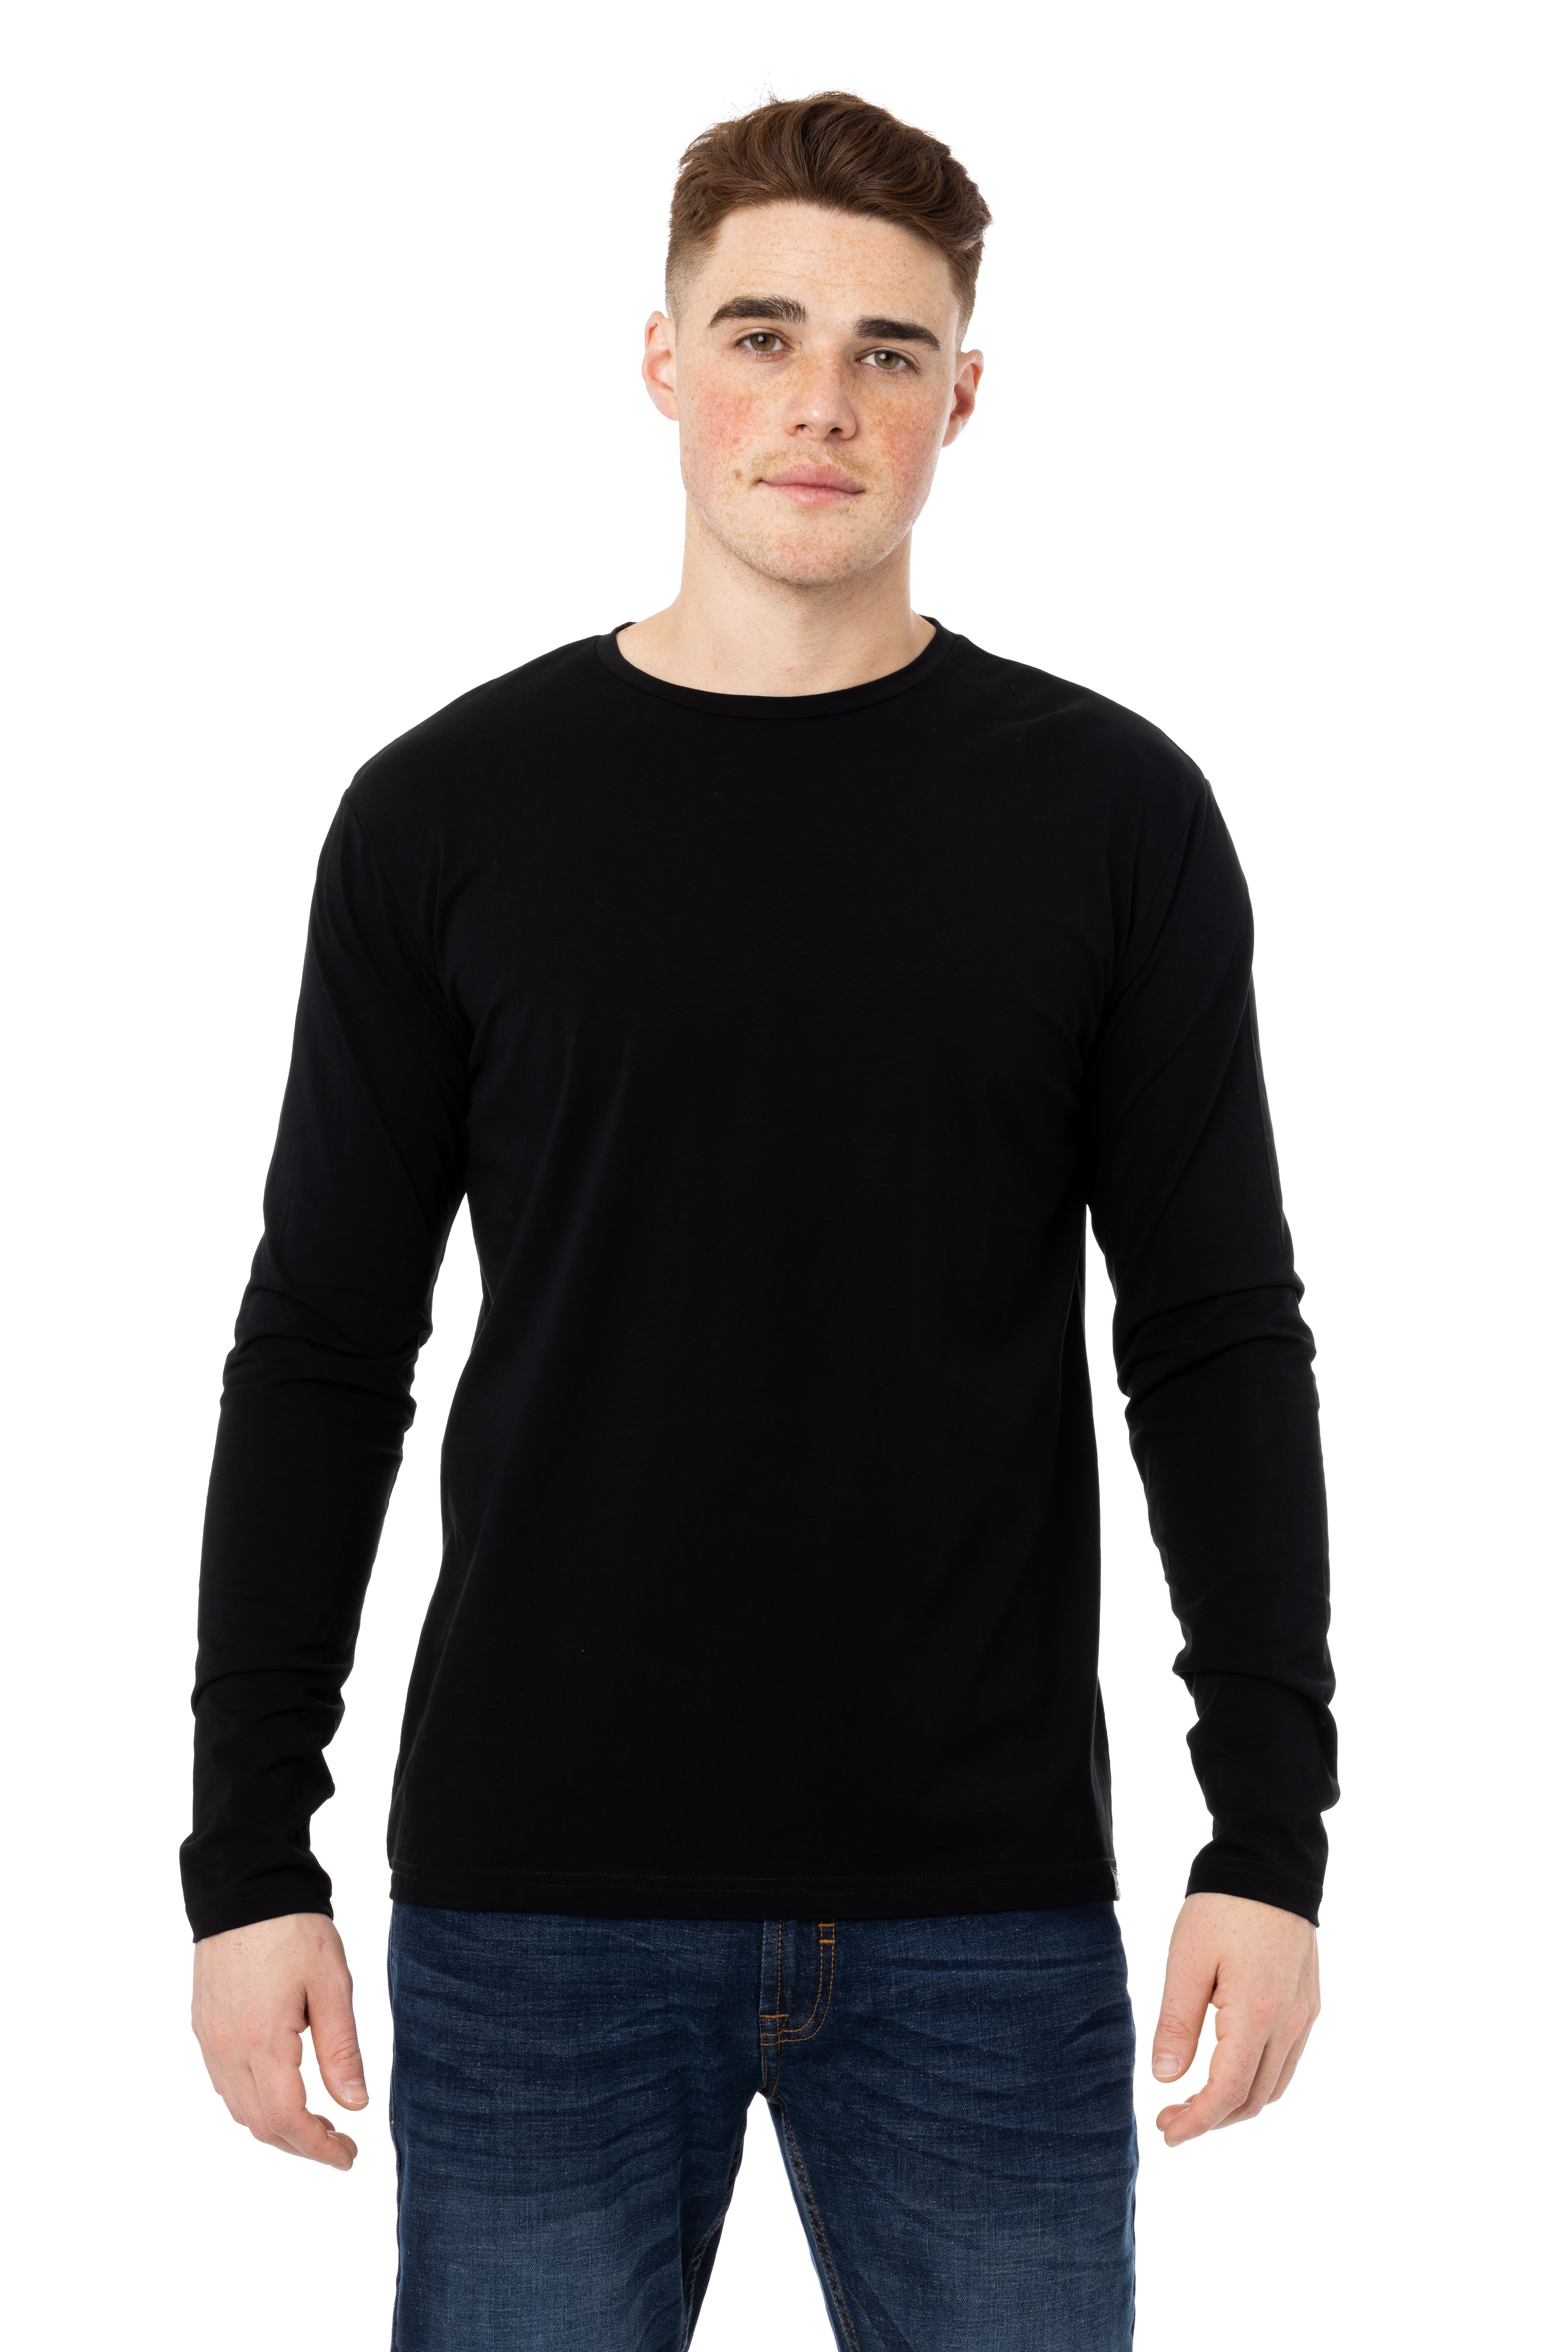 X RAY Men's Crewneck Long Sleeve T-Shirt, Soft Stretch Premium Cotton Slim  Fit Casual Fashion Tee for Men